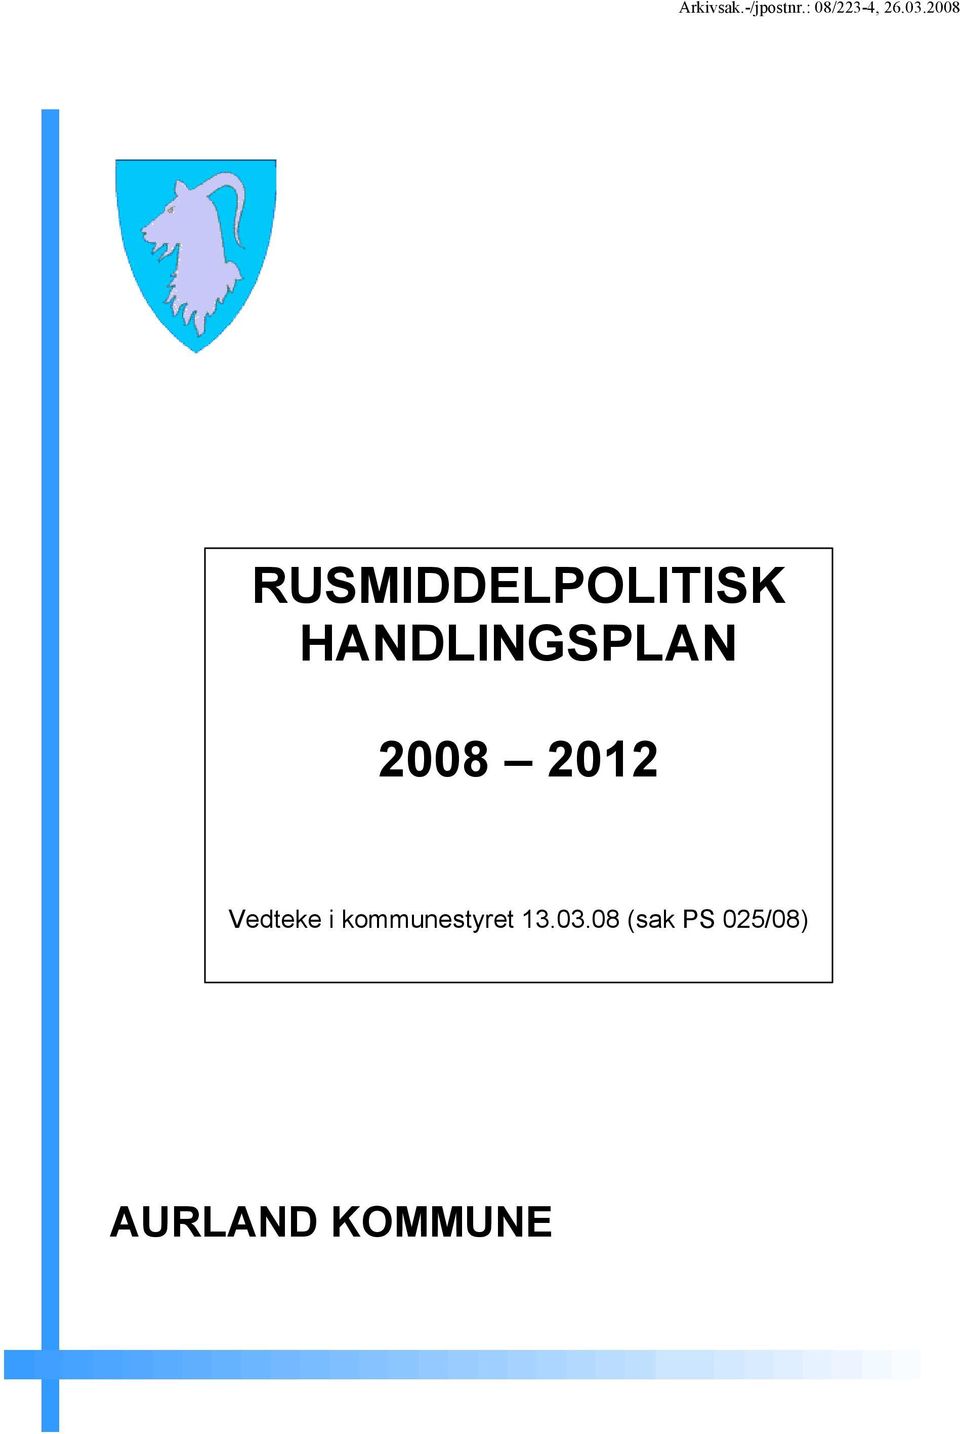 2008 2012 Vedteke i kommunestyret 13.